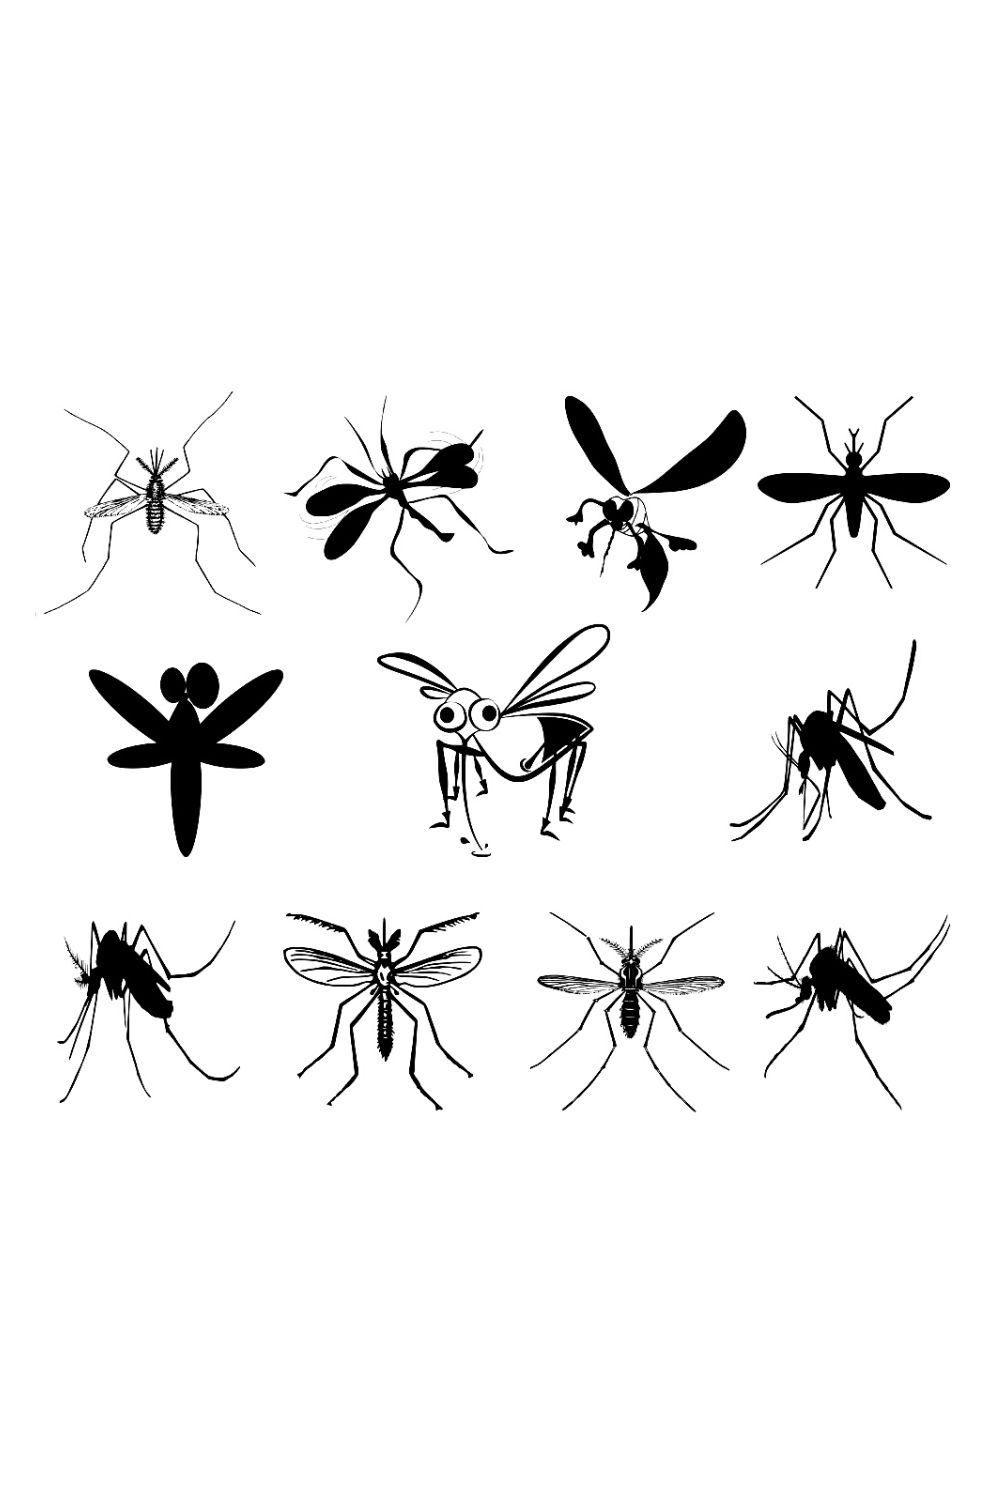 Mosquito Silhouette Bundle Pinterest image.